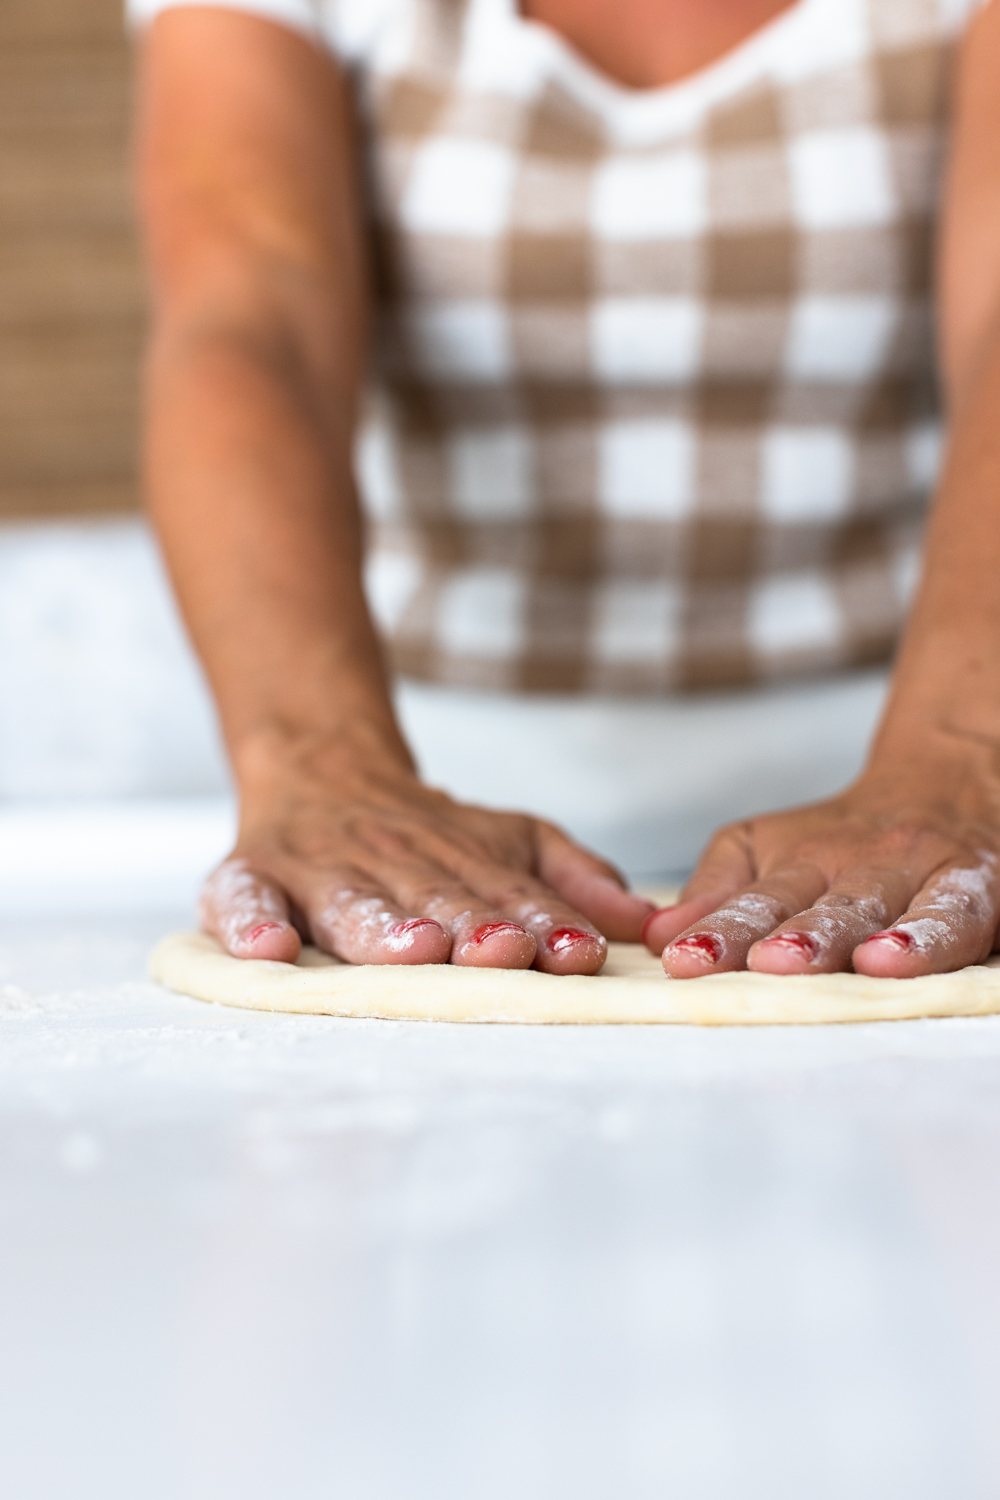 Shaping pizza dough